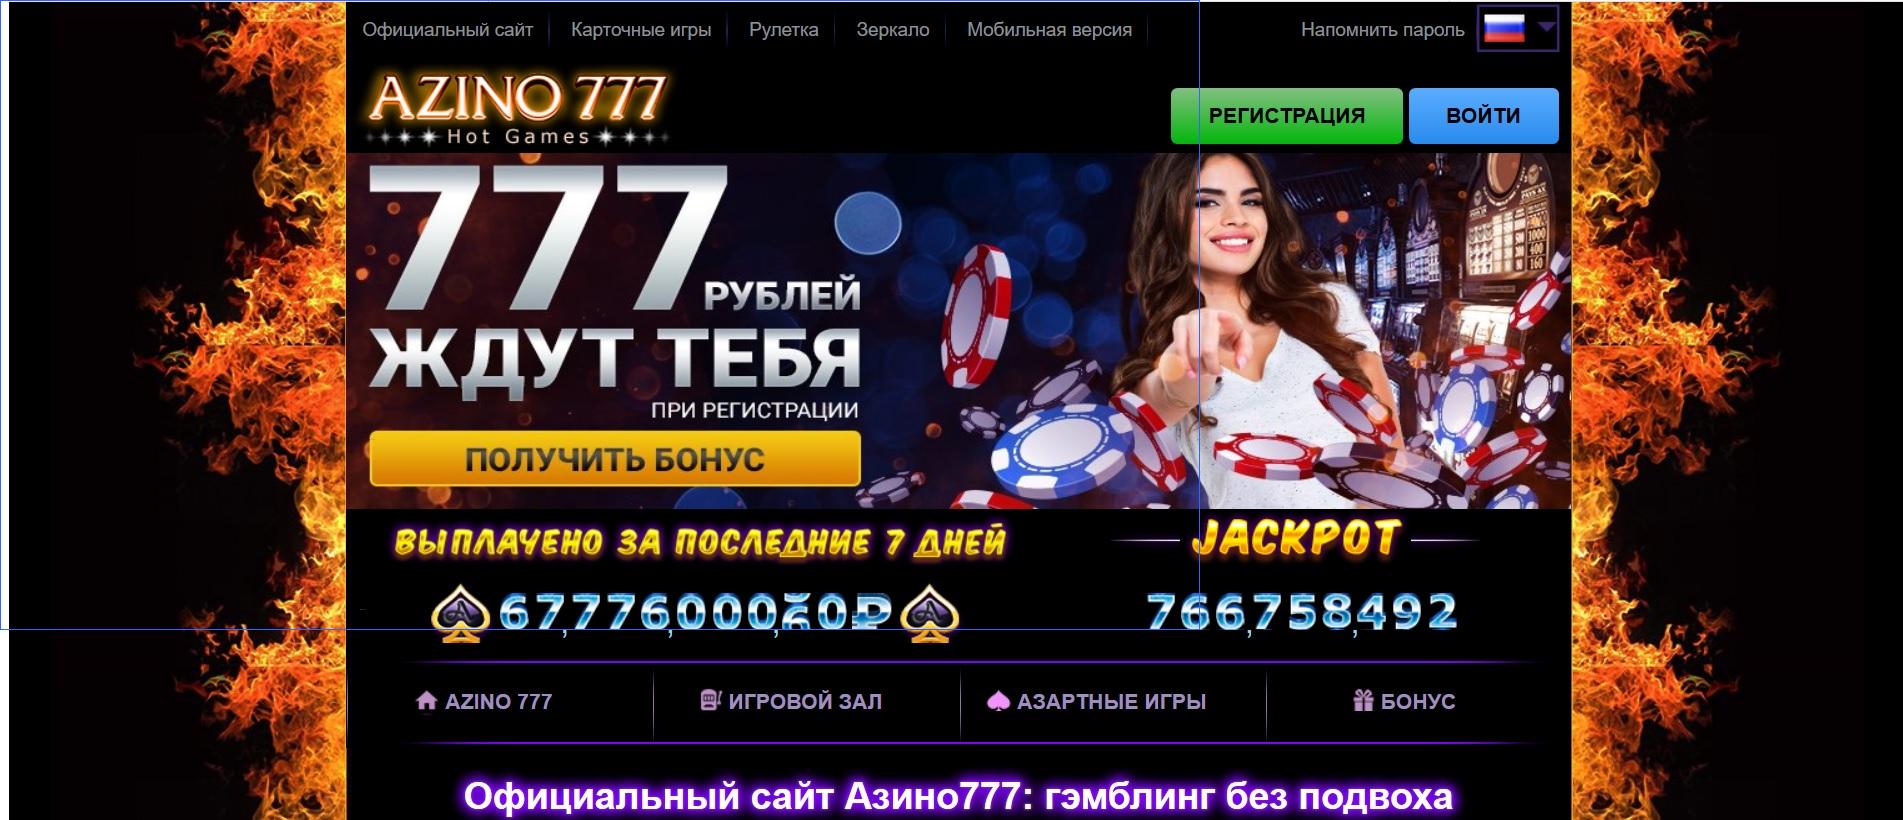 Azino777 play azino777 download pw. Казино 777. Казино Азино 777. Azino777 бонус.